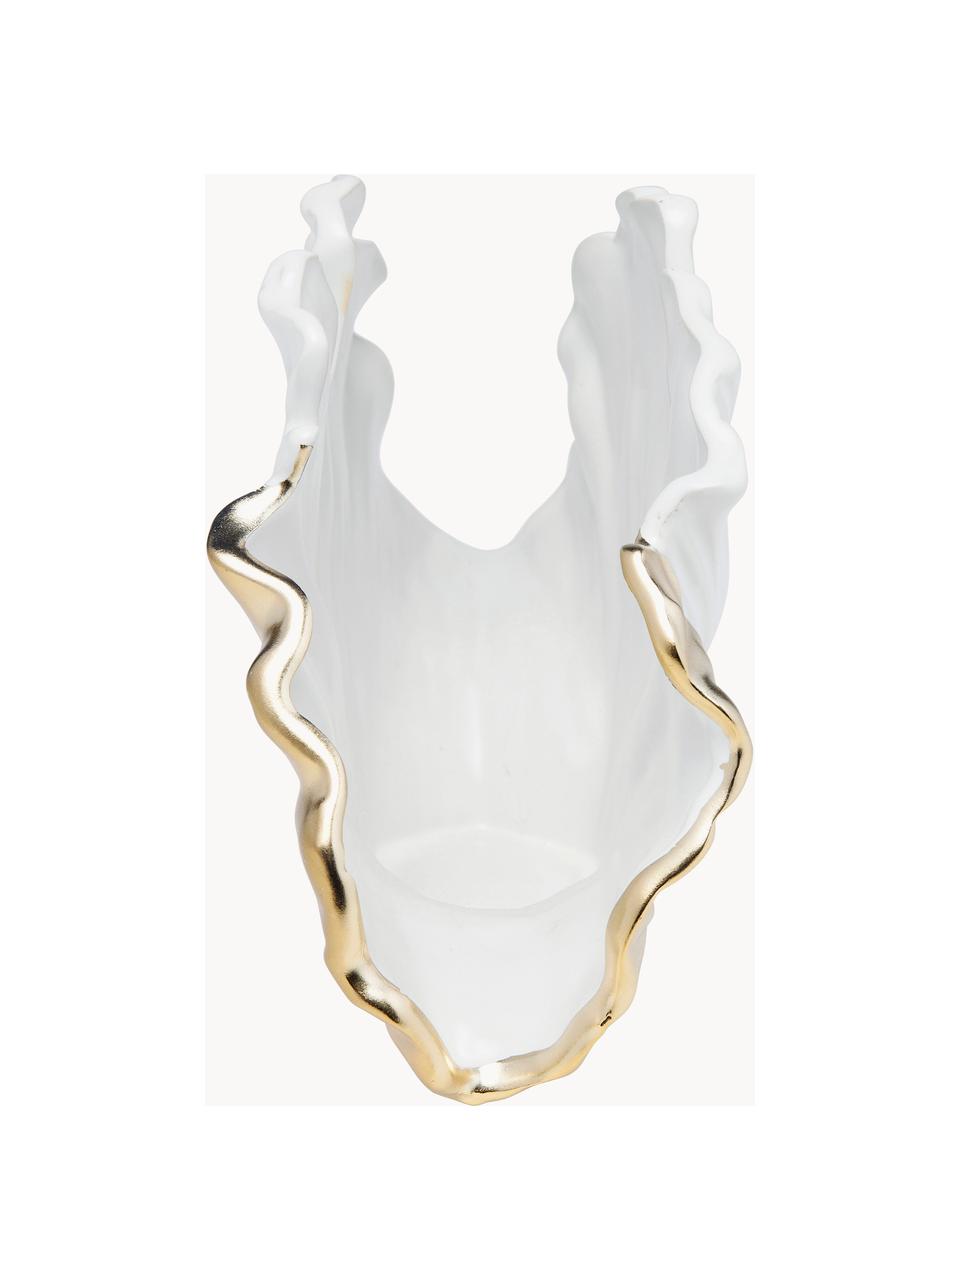 Vaso di design in ceramica Ginkgo Elegance, alt. 18 cm, Ceramica smaltata, Bianco, dorato, Larg. 26 x Alt. 18 cm